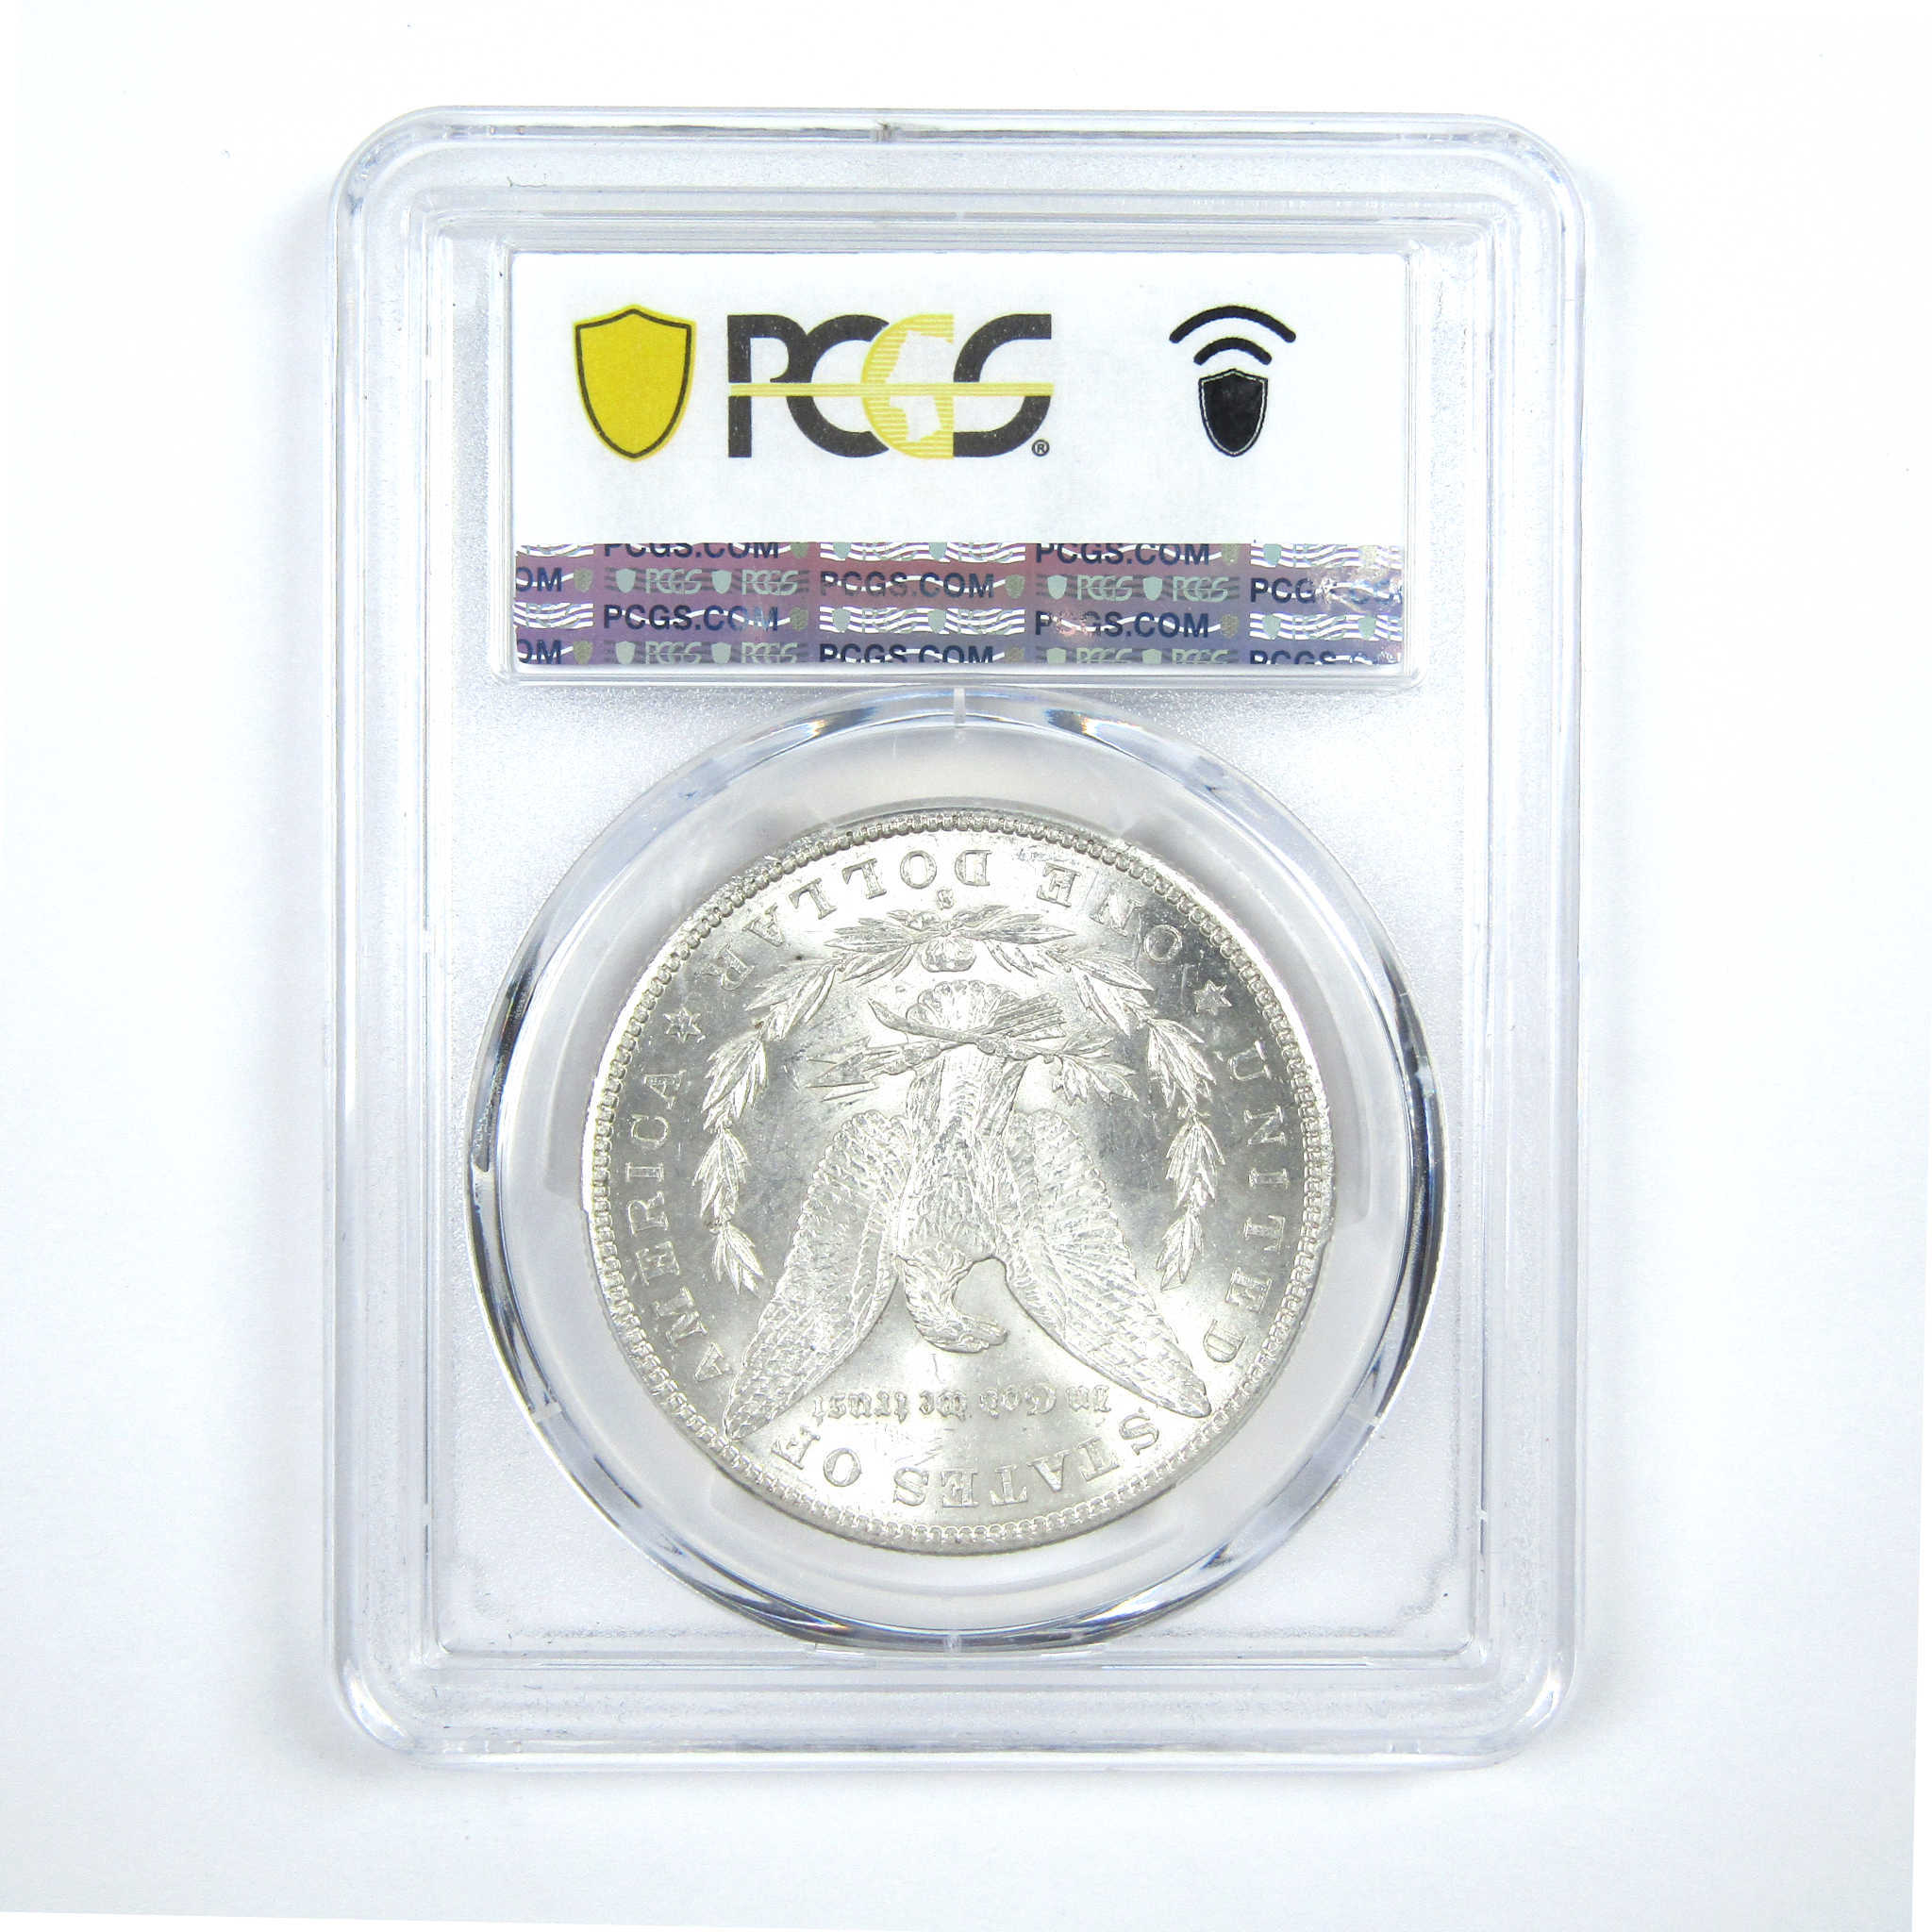 1887 S Morgan Dollar MS 63 PCGS Silver $1 Uncirculated Coin SKU:I14247